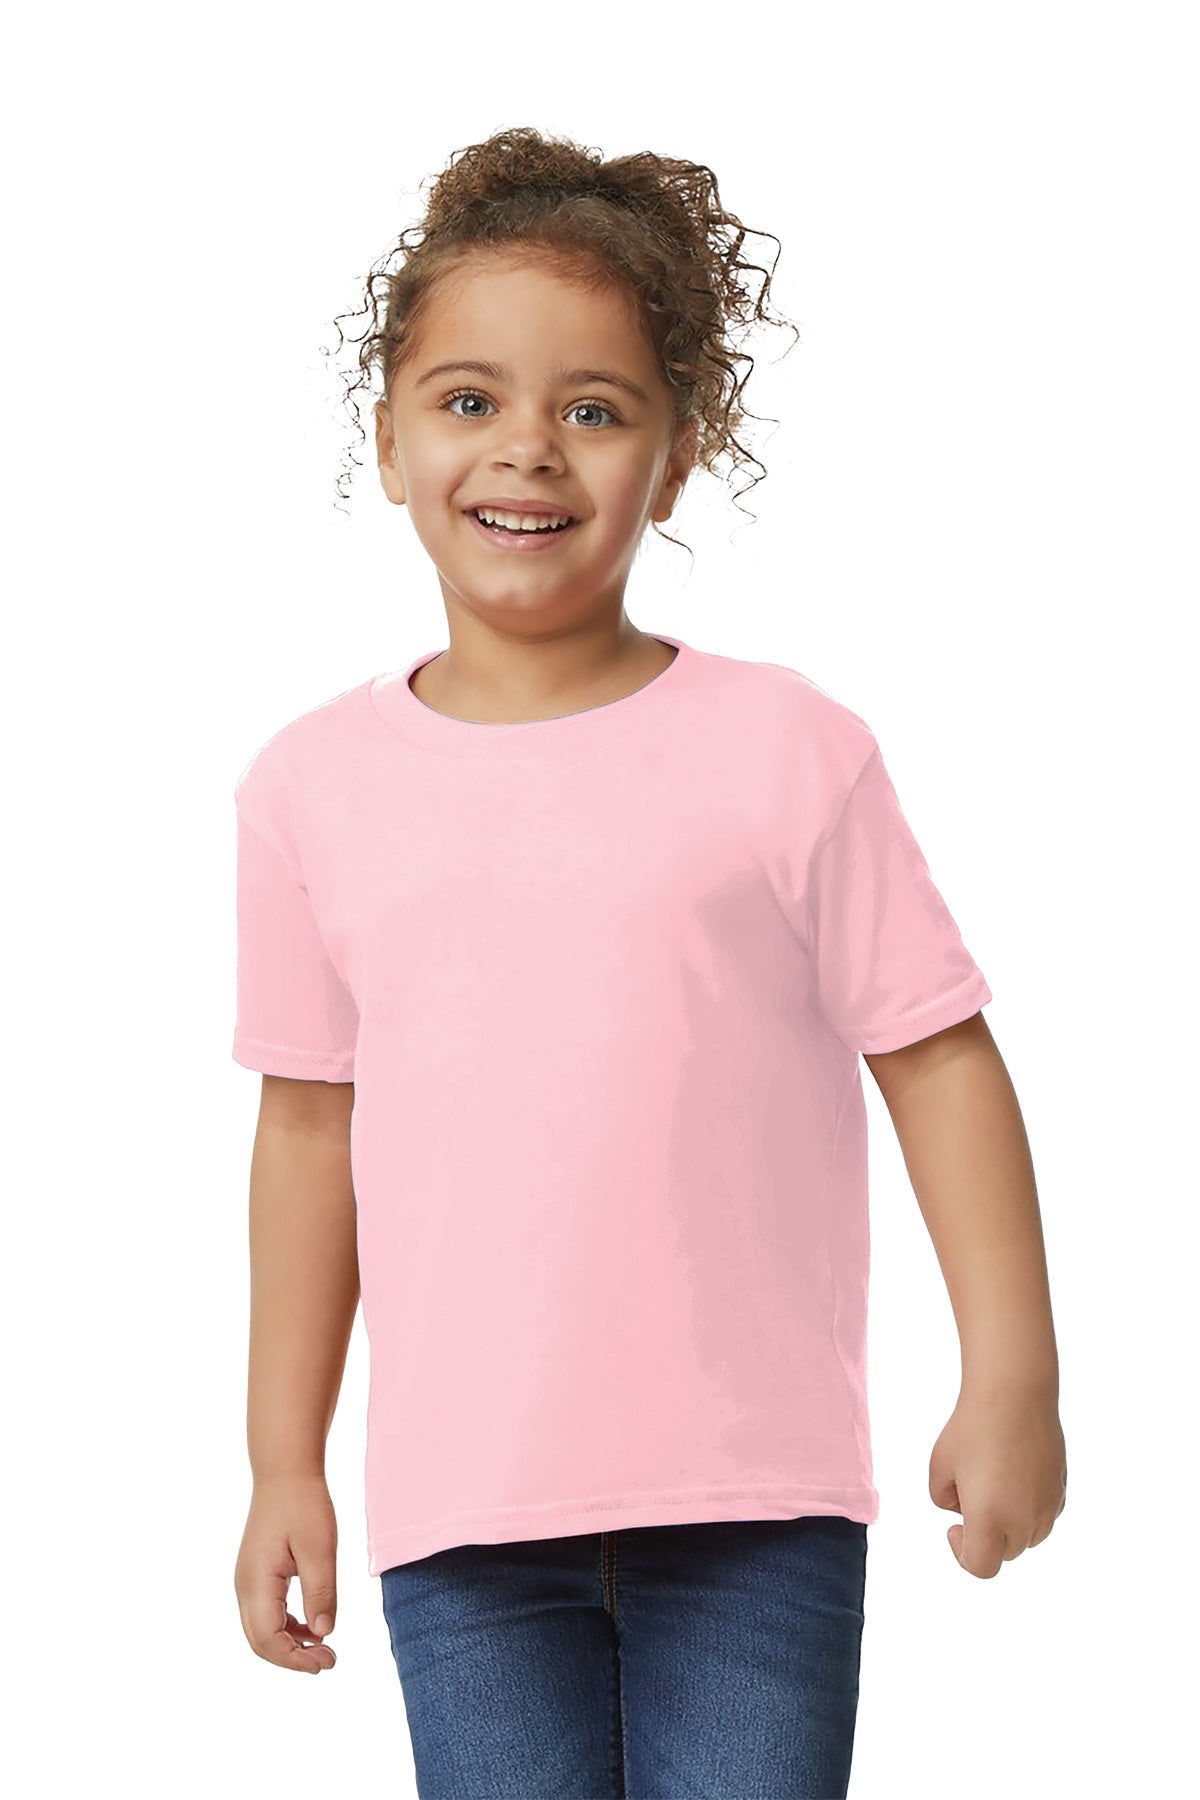 Gilden 5100P Toddler T-Shirt 3T / Pink